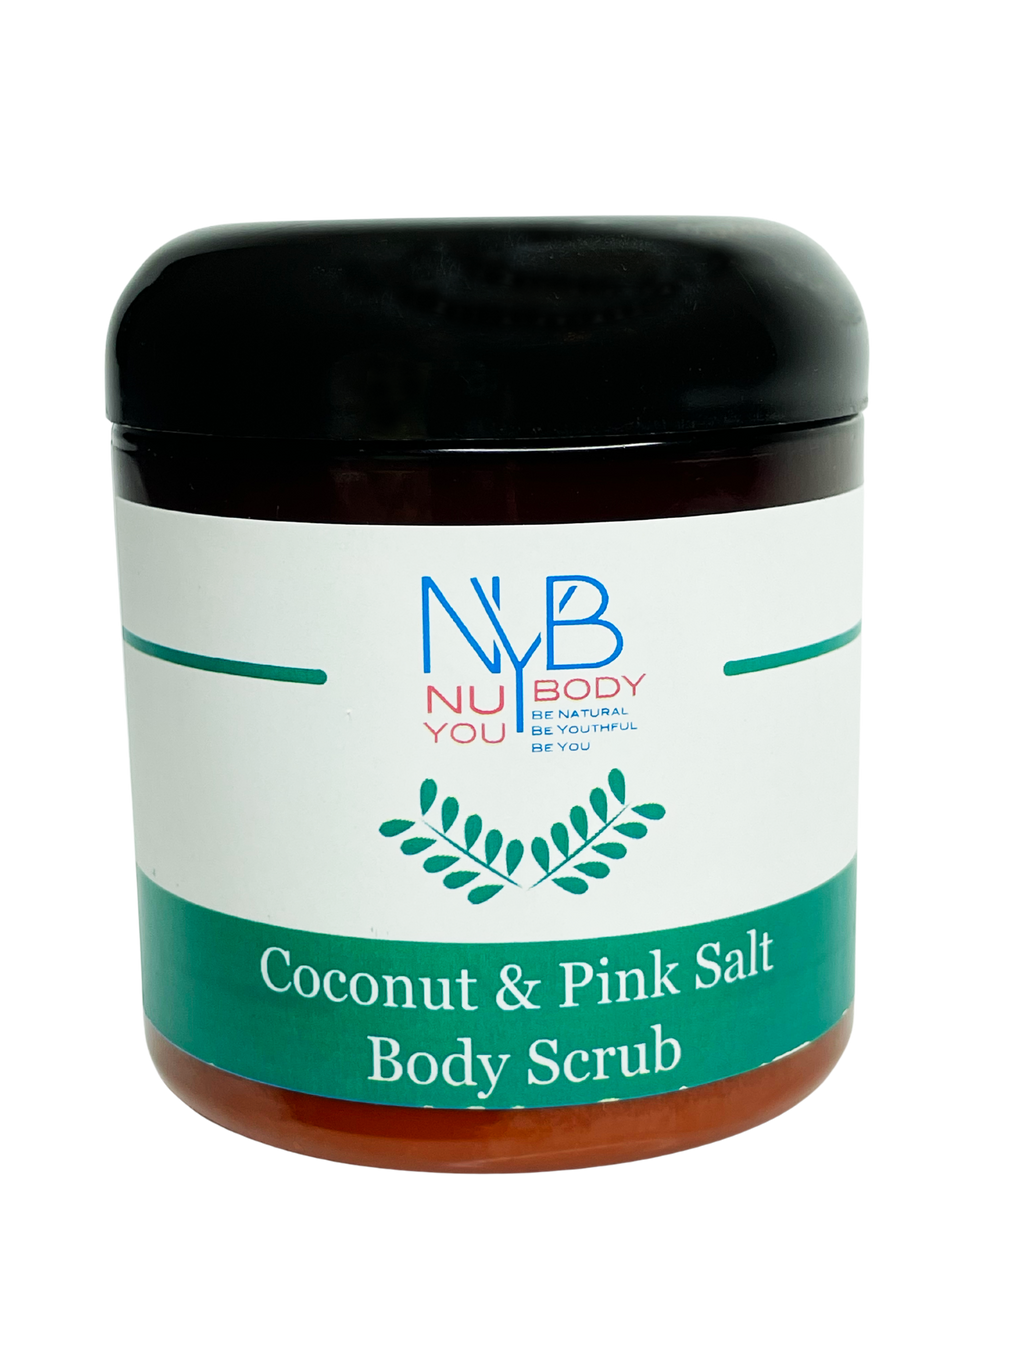 Coconut & Pink Salt Body Scrub